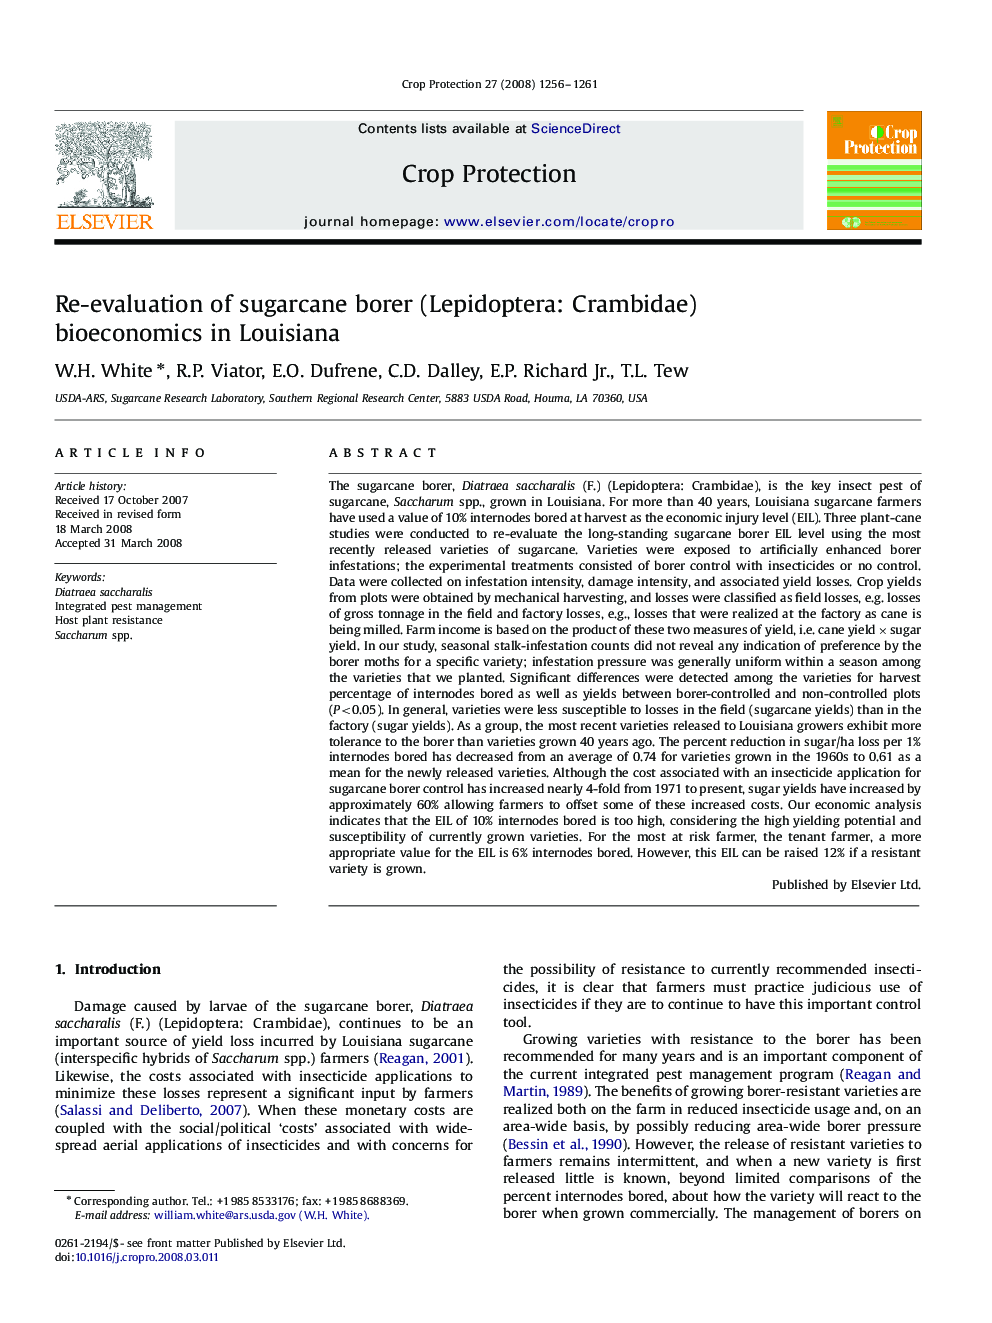 Re-evaluation of sugarcane borer (Lepidoptera: Crambidae) bioeconomics in Louisiana